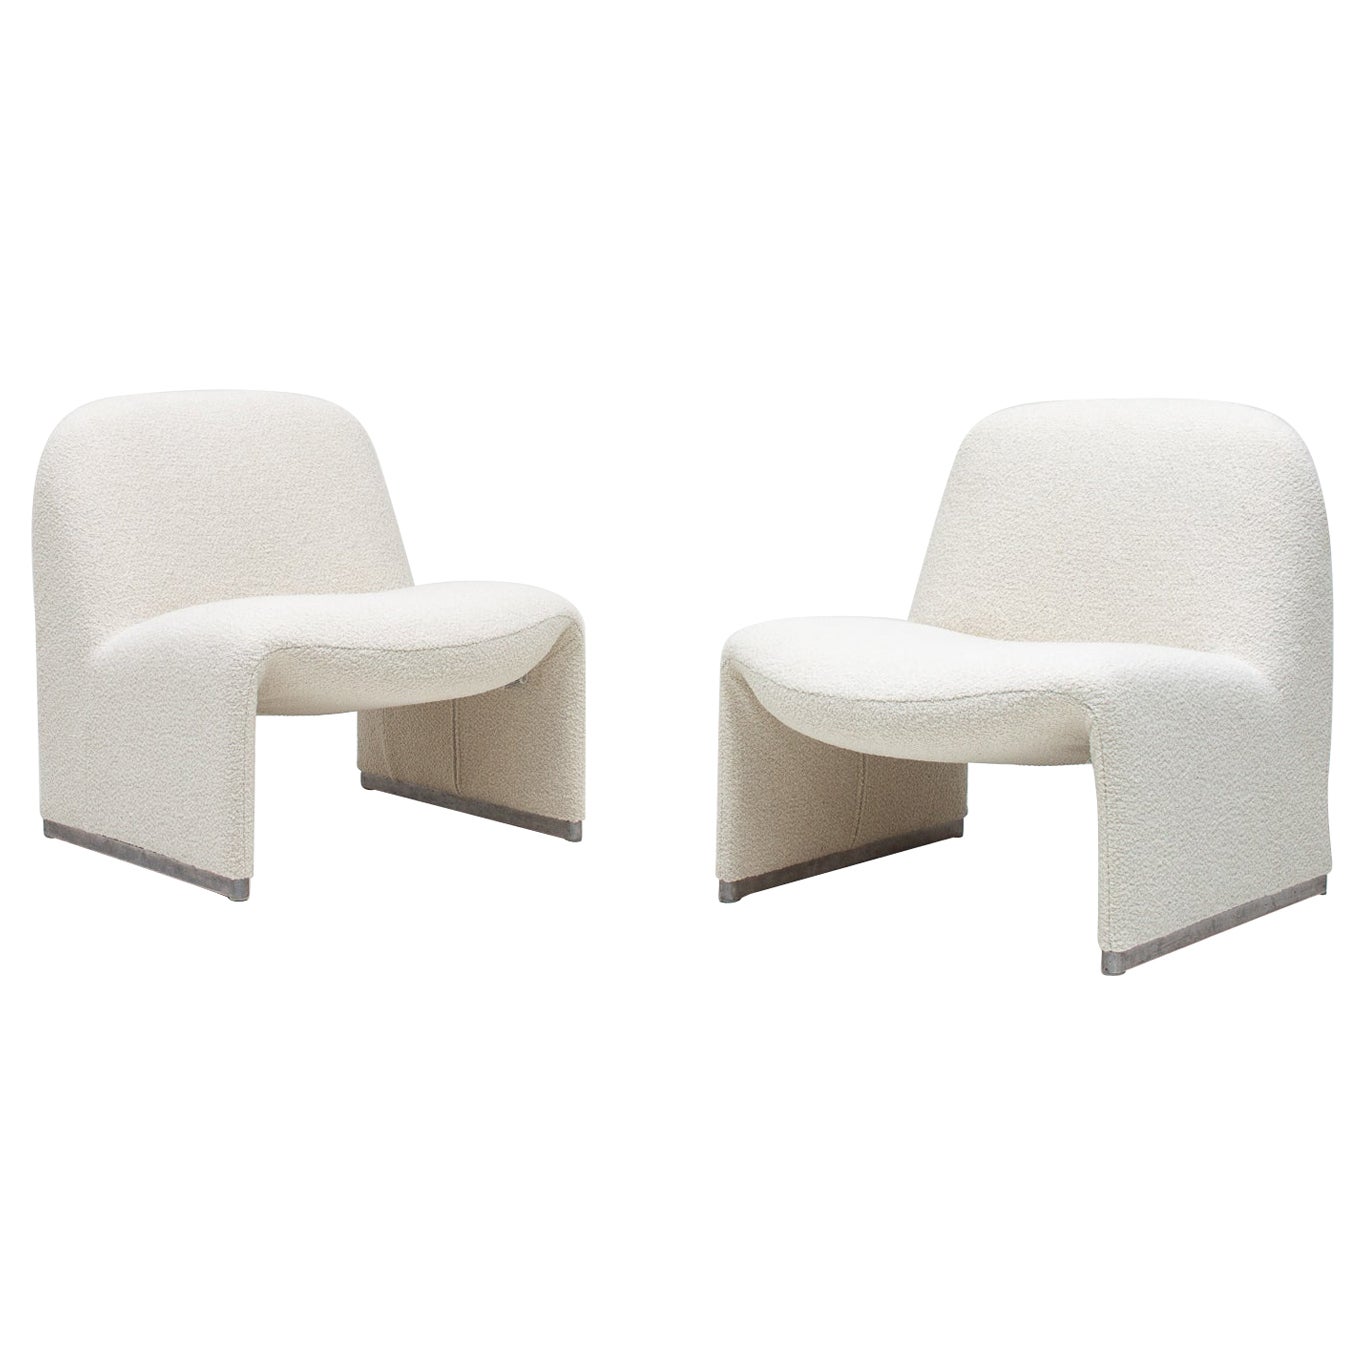 Giancarlo Piretti “Alky” Chairs In Yarn Collective bouclé *Customizable*